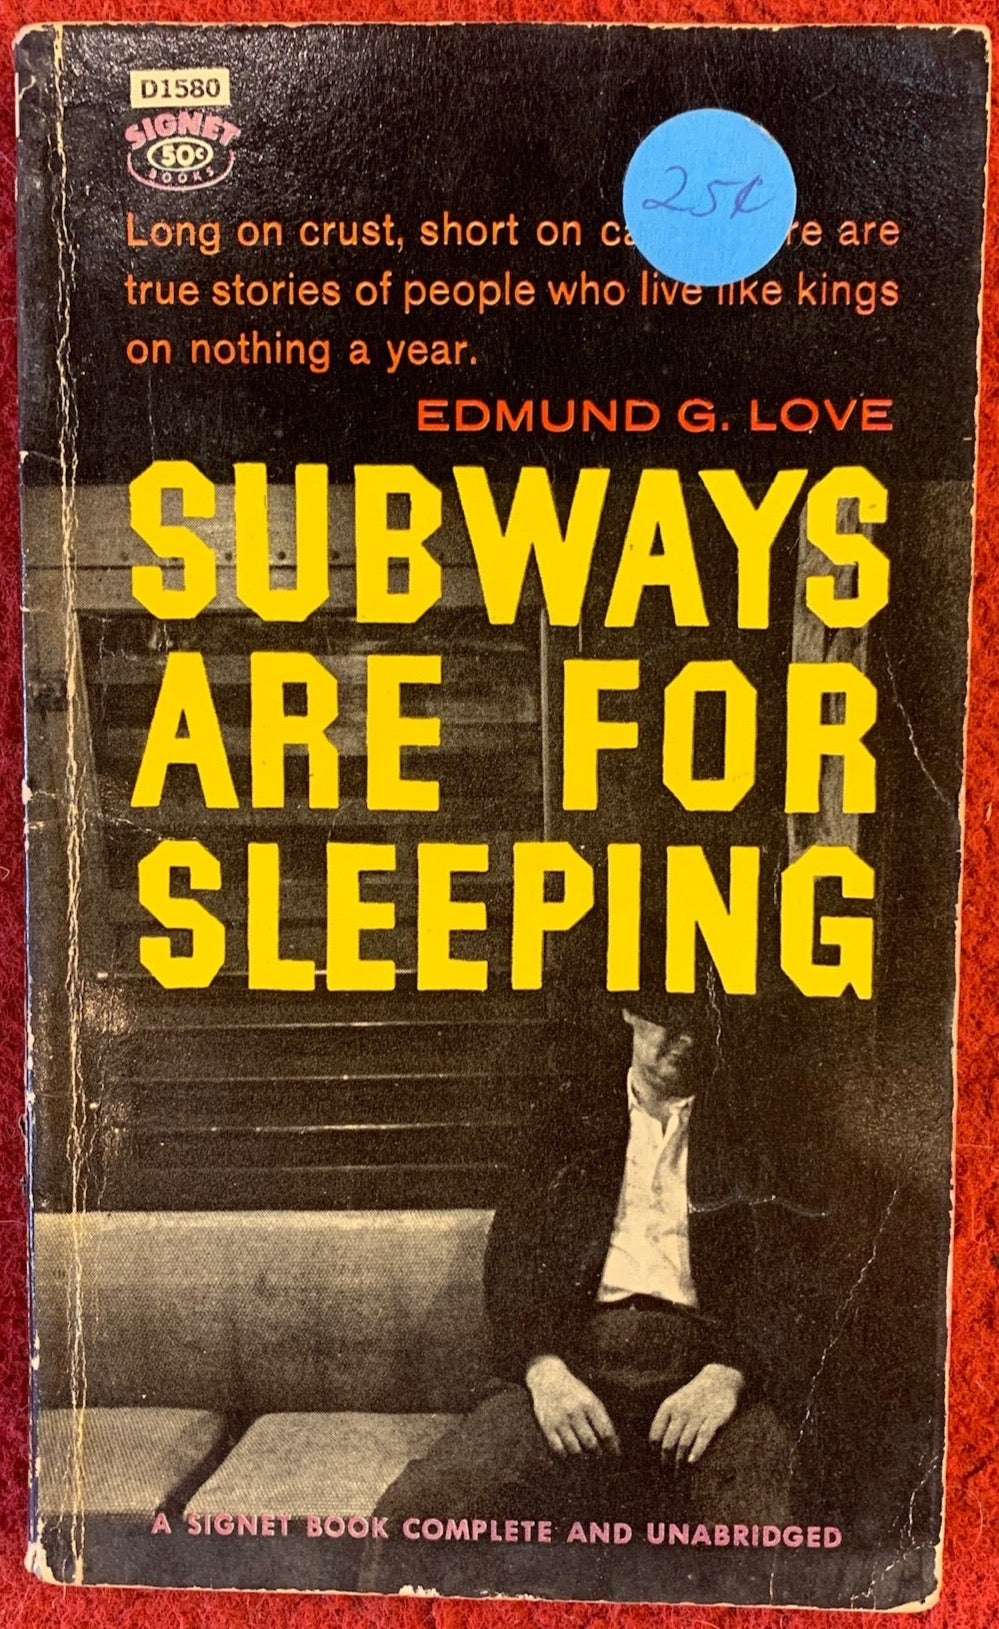 Subways Are For Sleeping, Edmund G. Love, 1962, Signet Books #D1580*